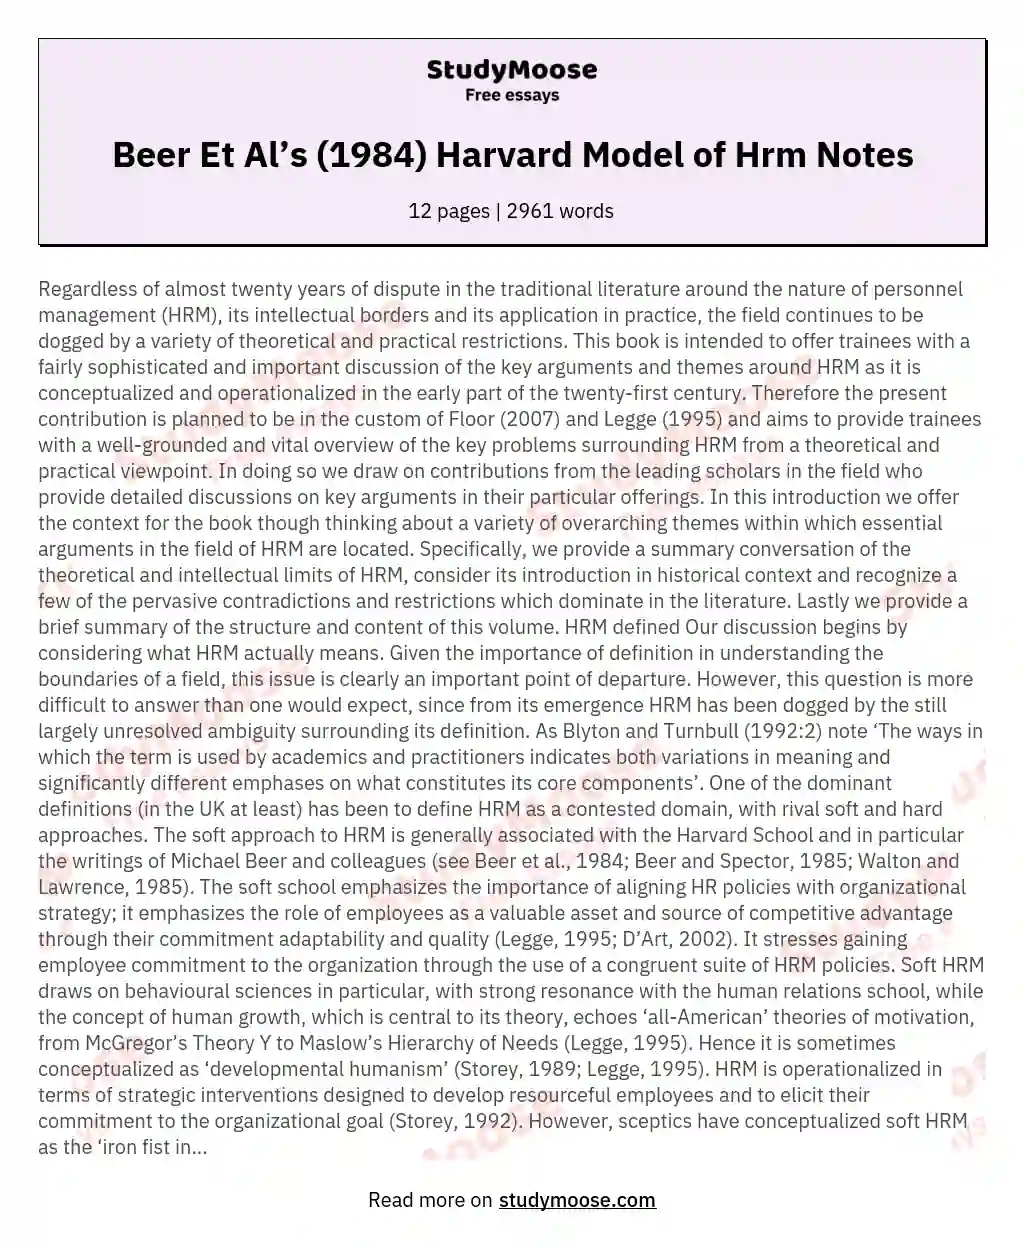 Beer Et Al’s (1984) Harvard Model of Hrm Notes essay